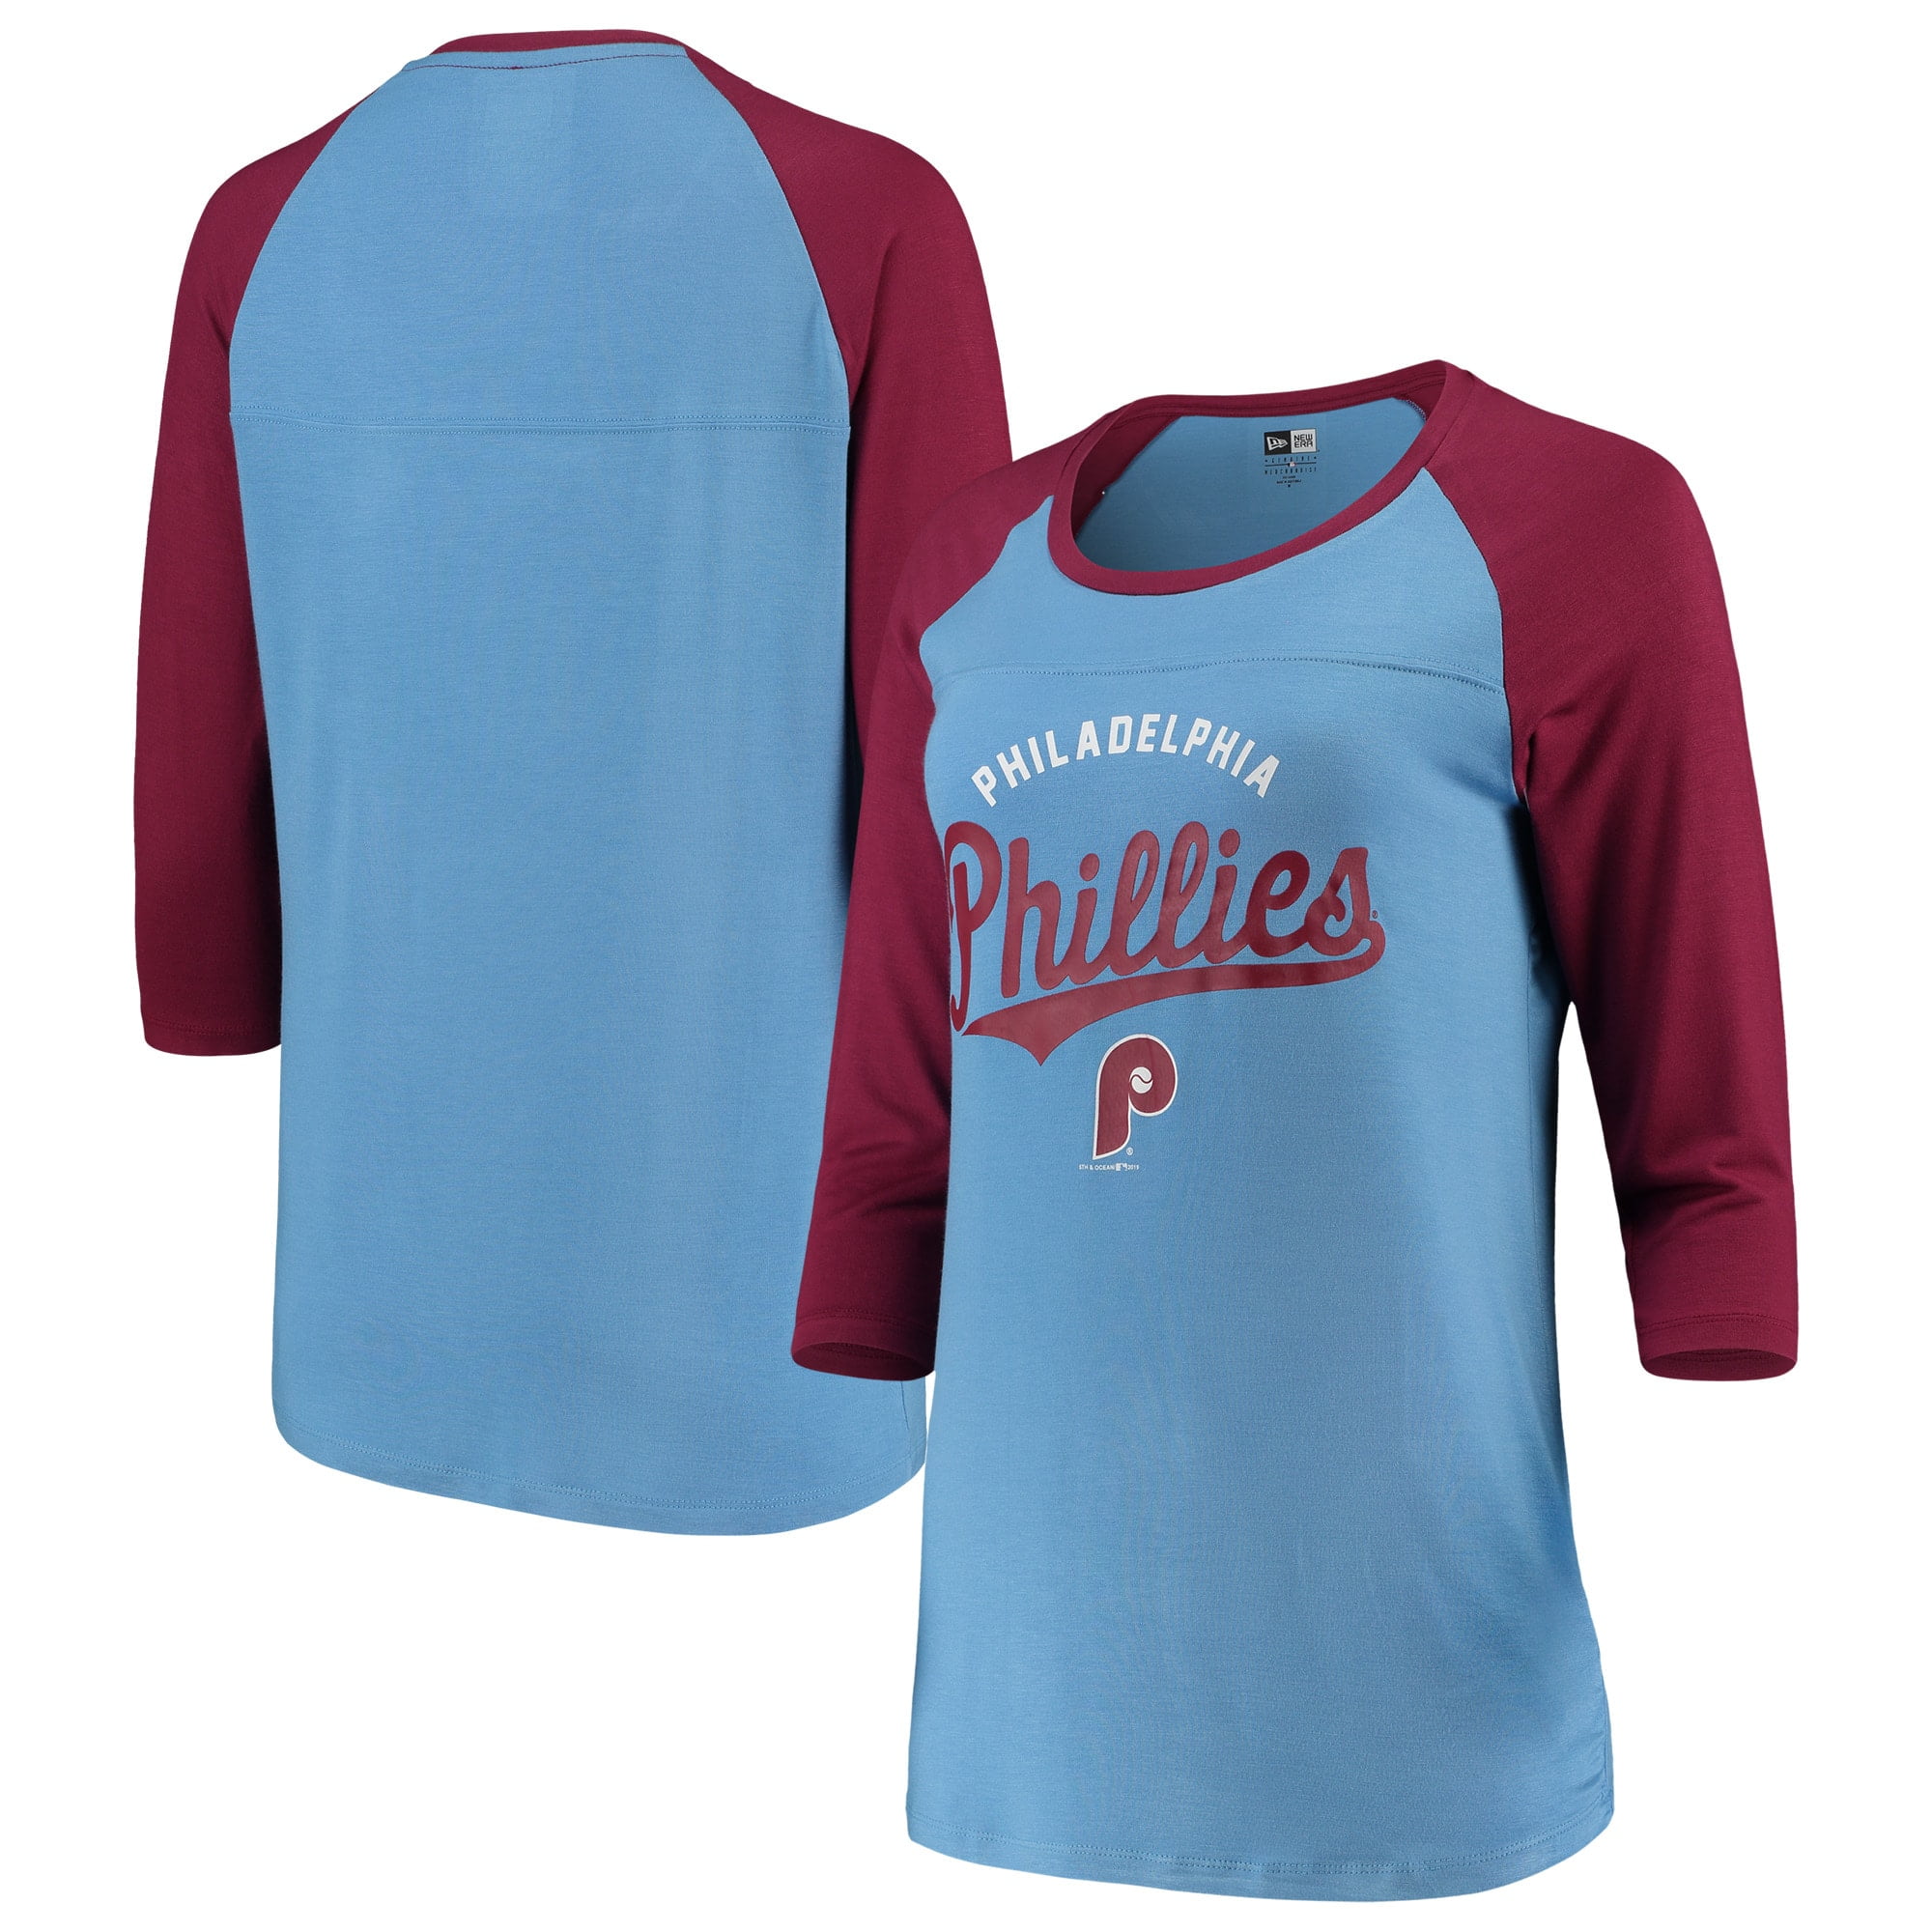 phillies 3 4 sleeve shirts